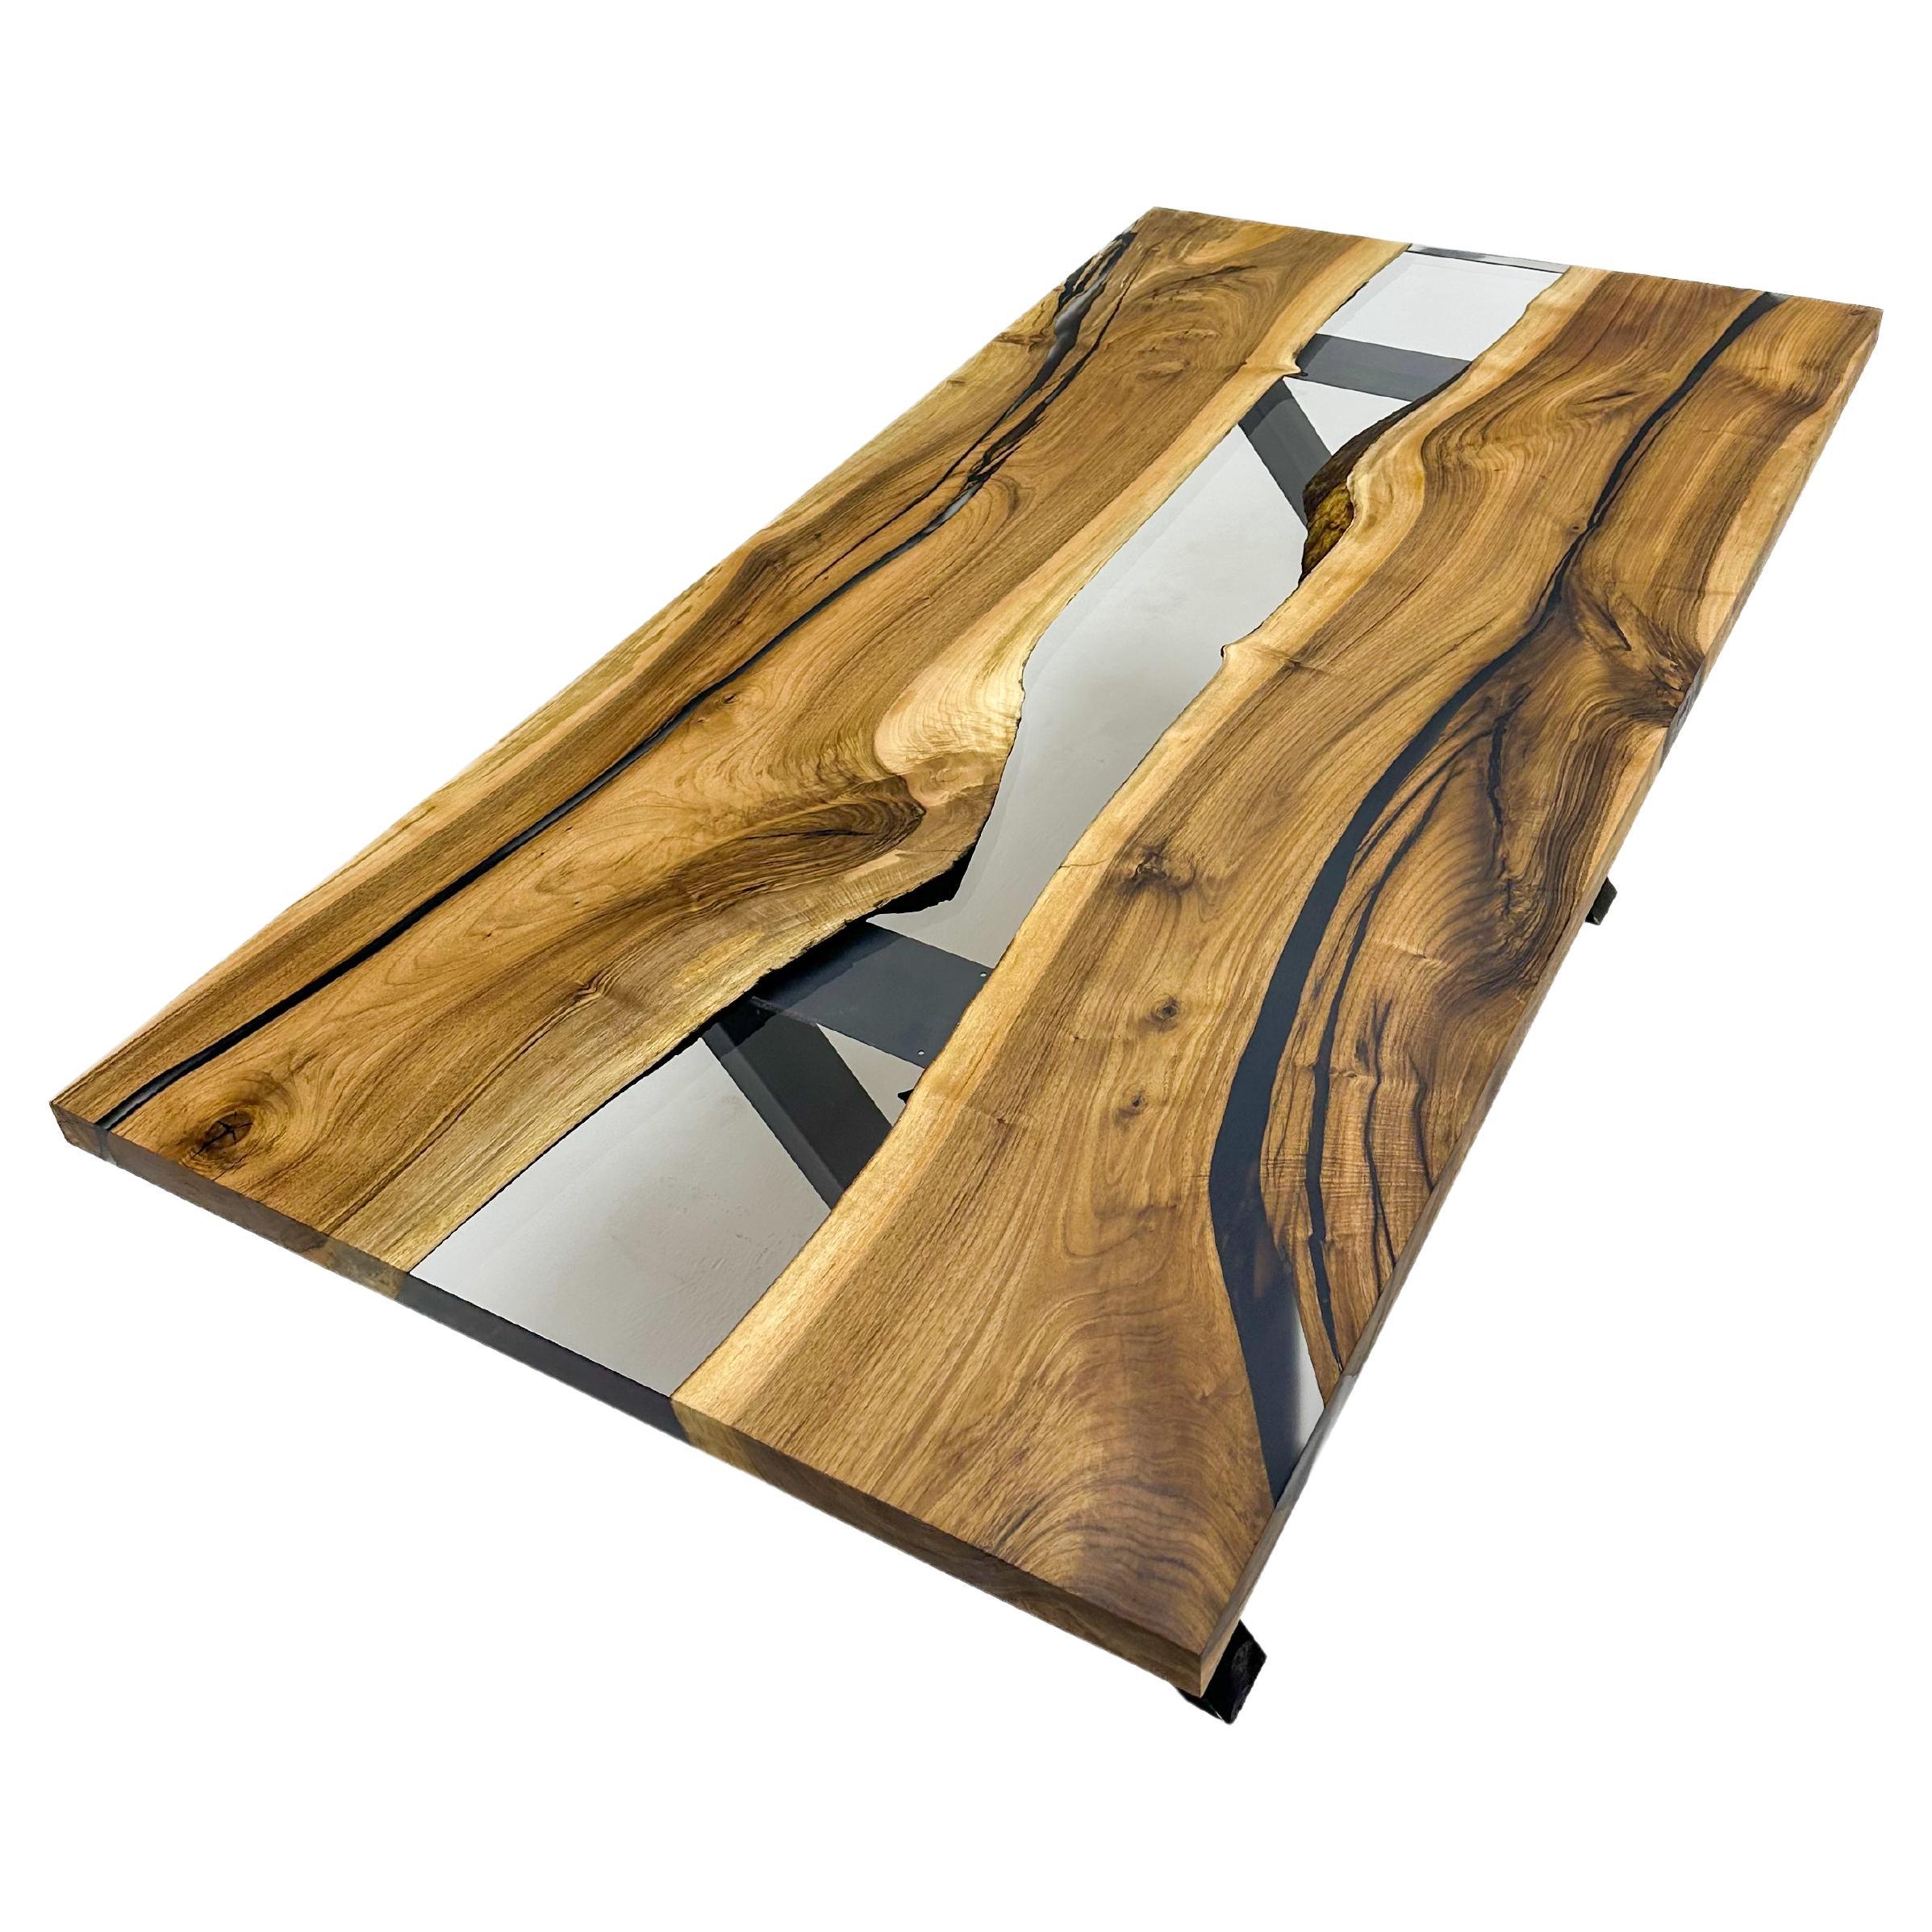 Mesa de comedor de madera de nogal con borde vivo de resina epoxi transparente